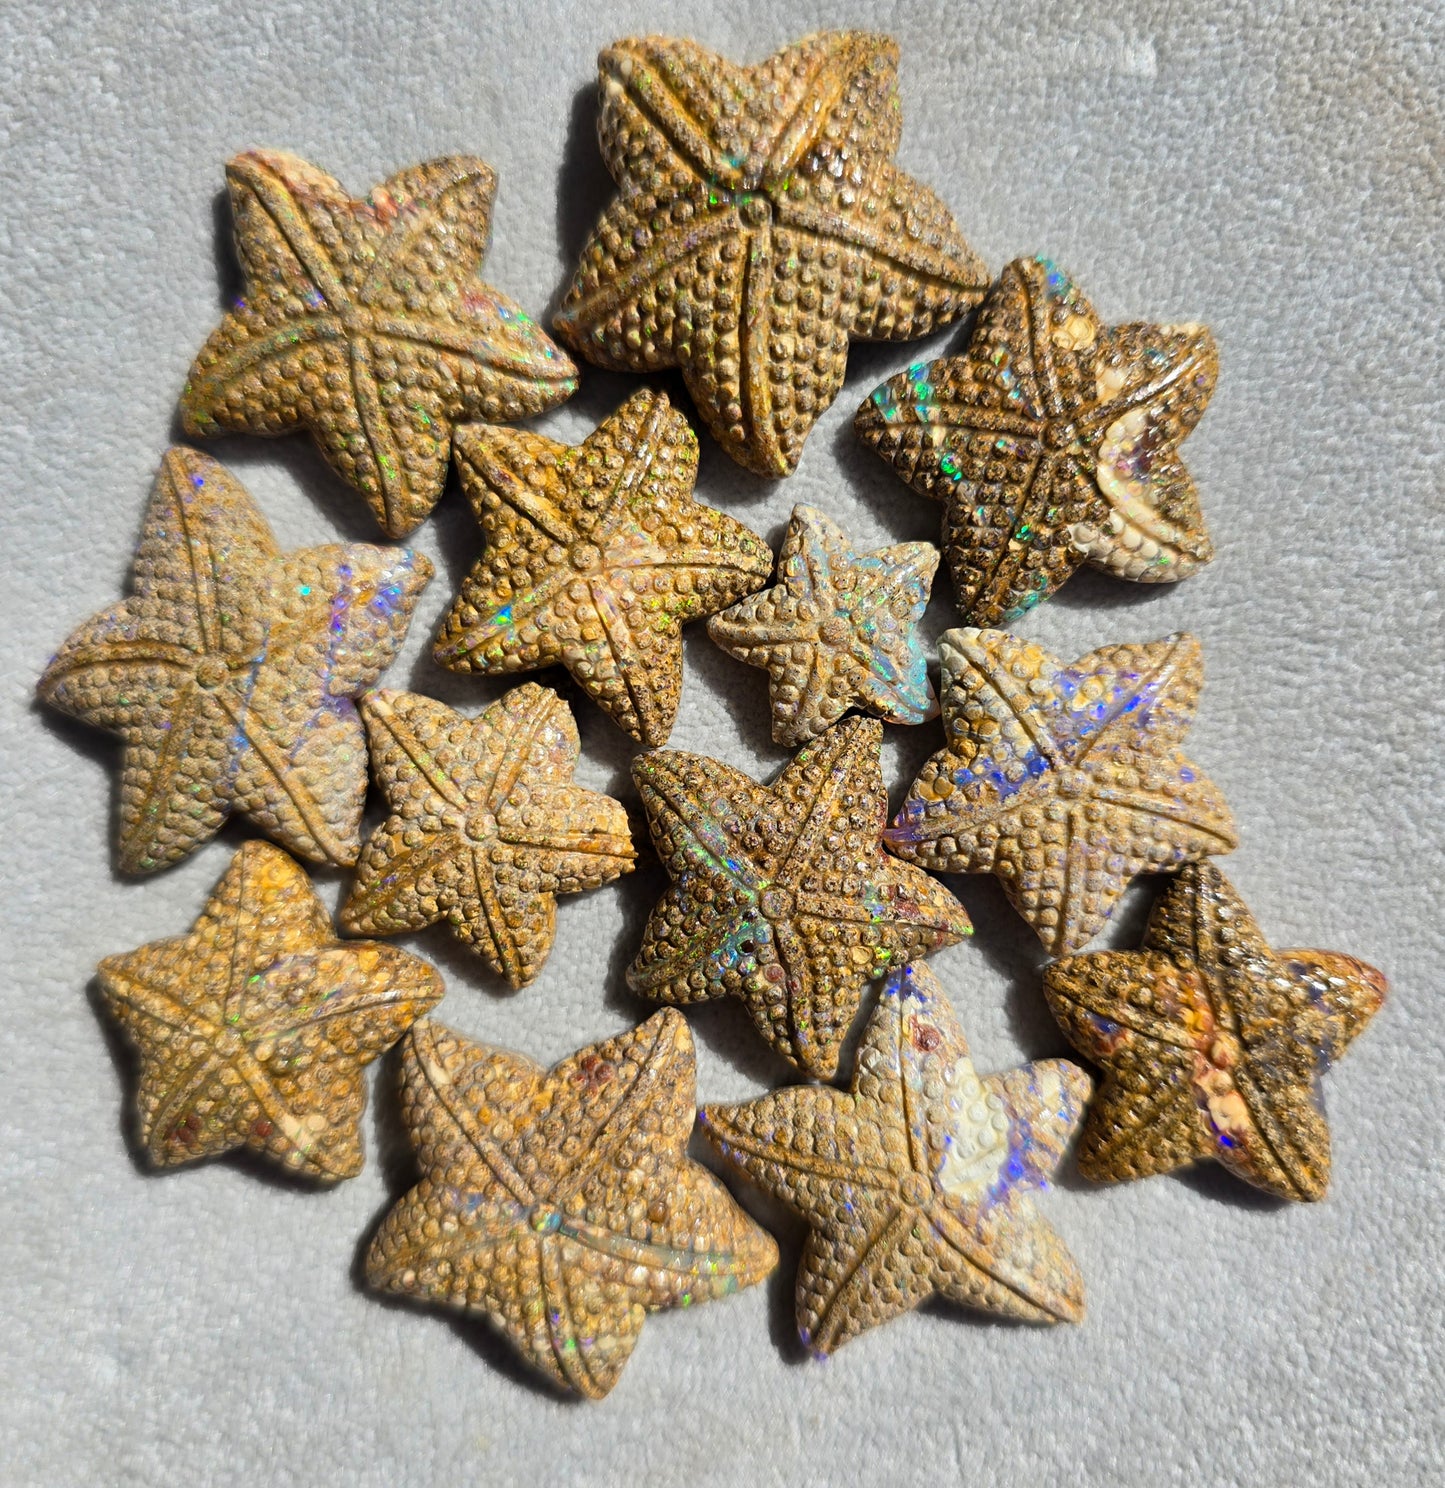 Exquisite 24.27 Ct Australian Boulder Opal Matrix Starfish Carving